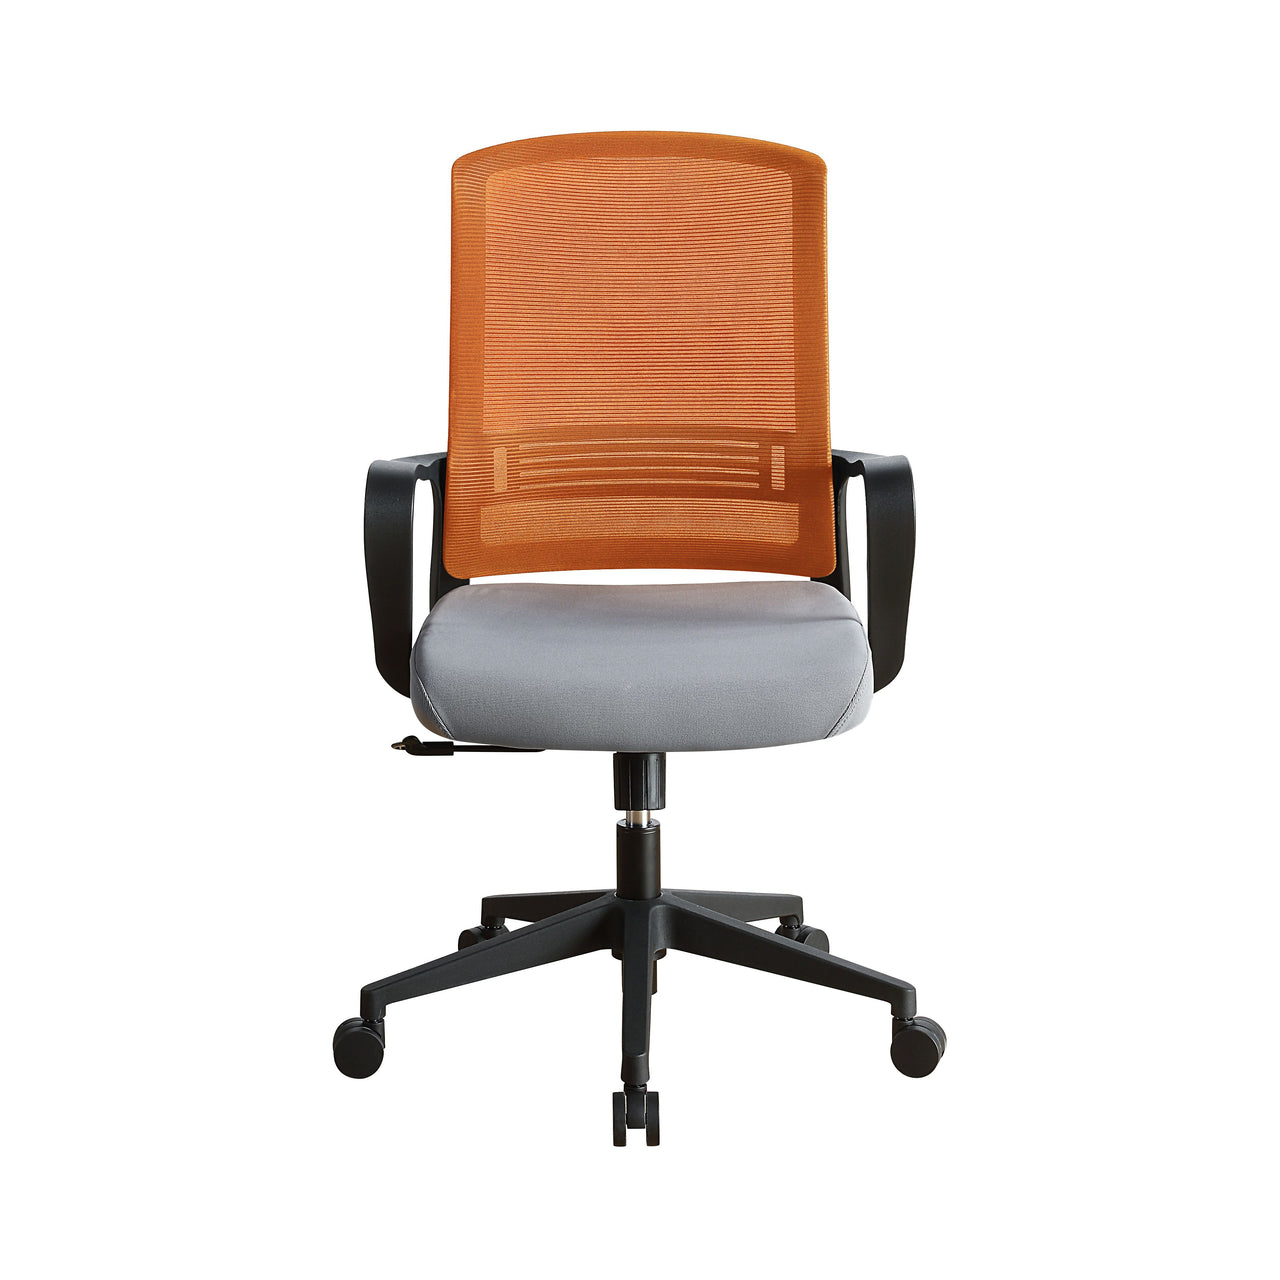 Tanko - Office Chair - Tony's Home Furnishings